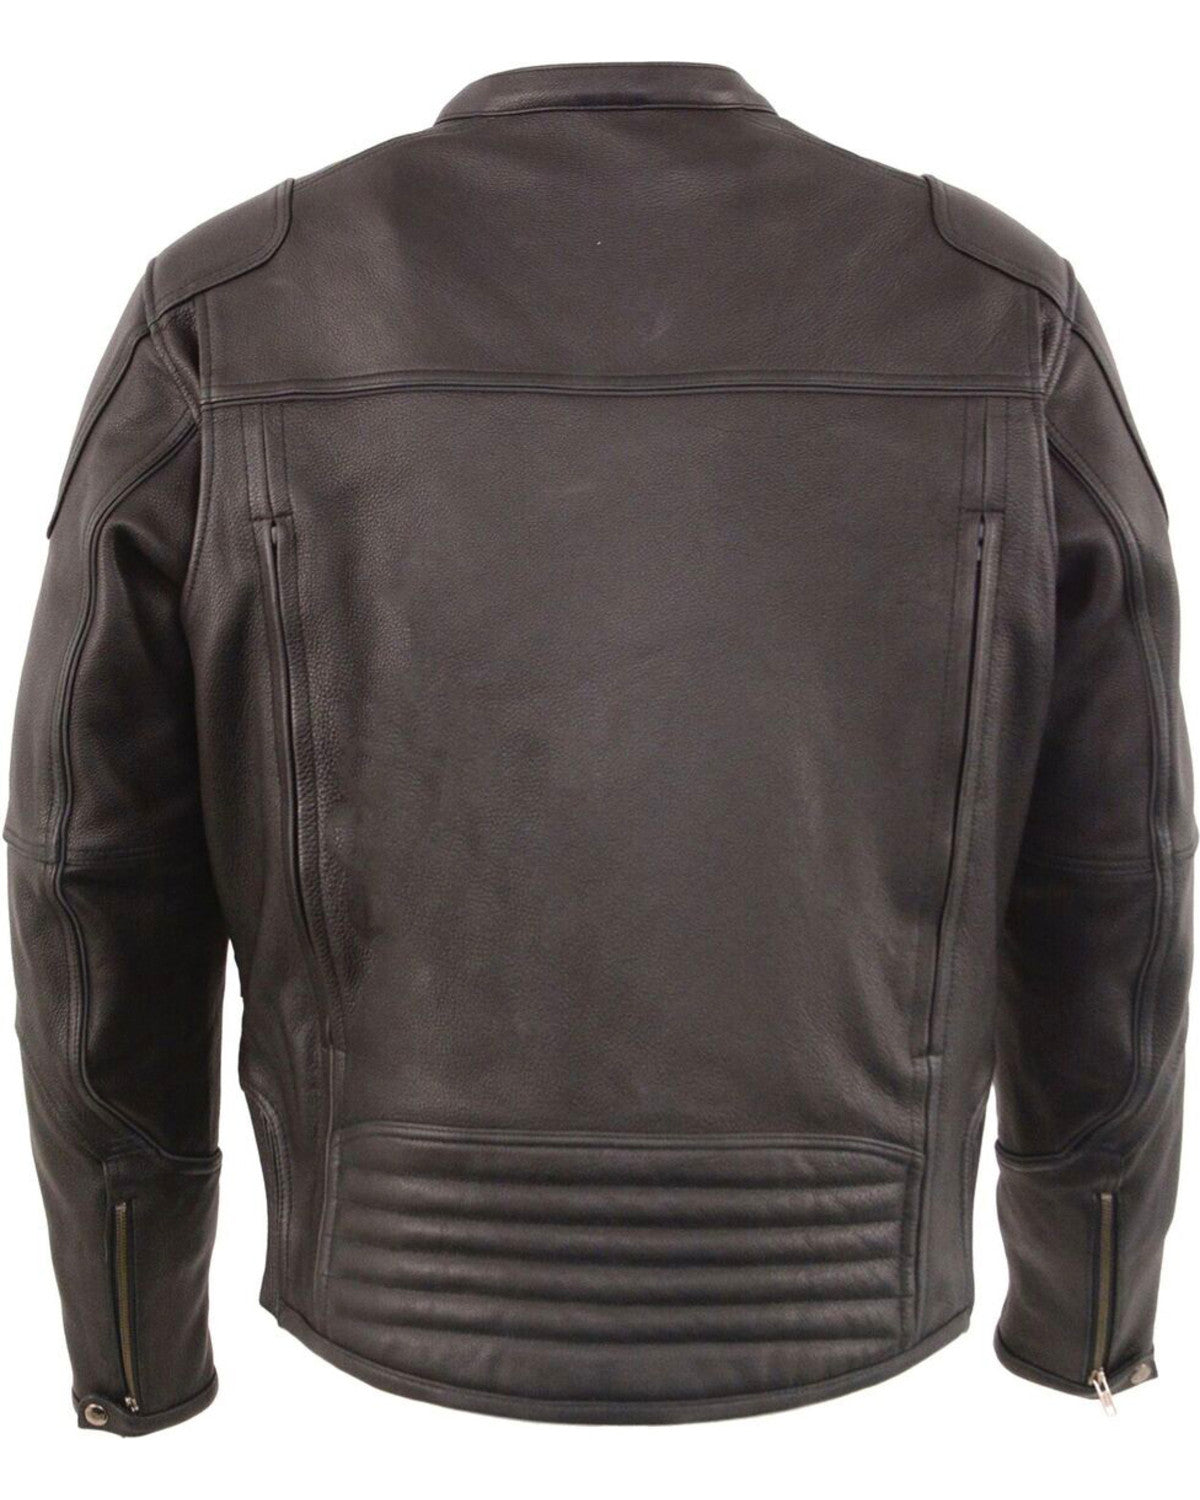 Men's Black Cool Tec Leather Biker Jacket